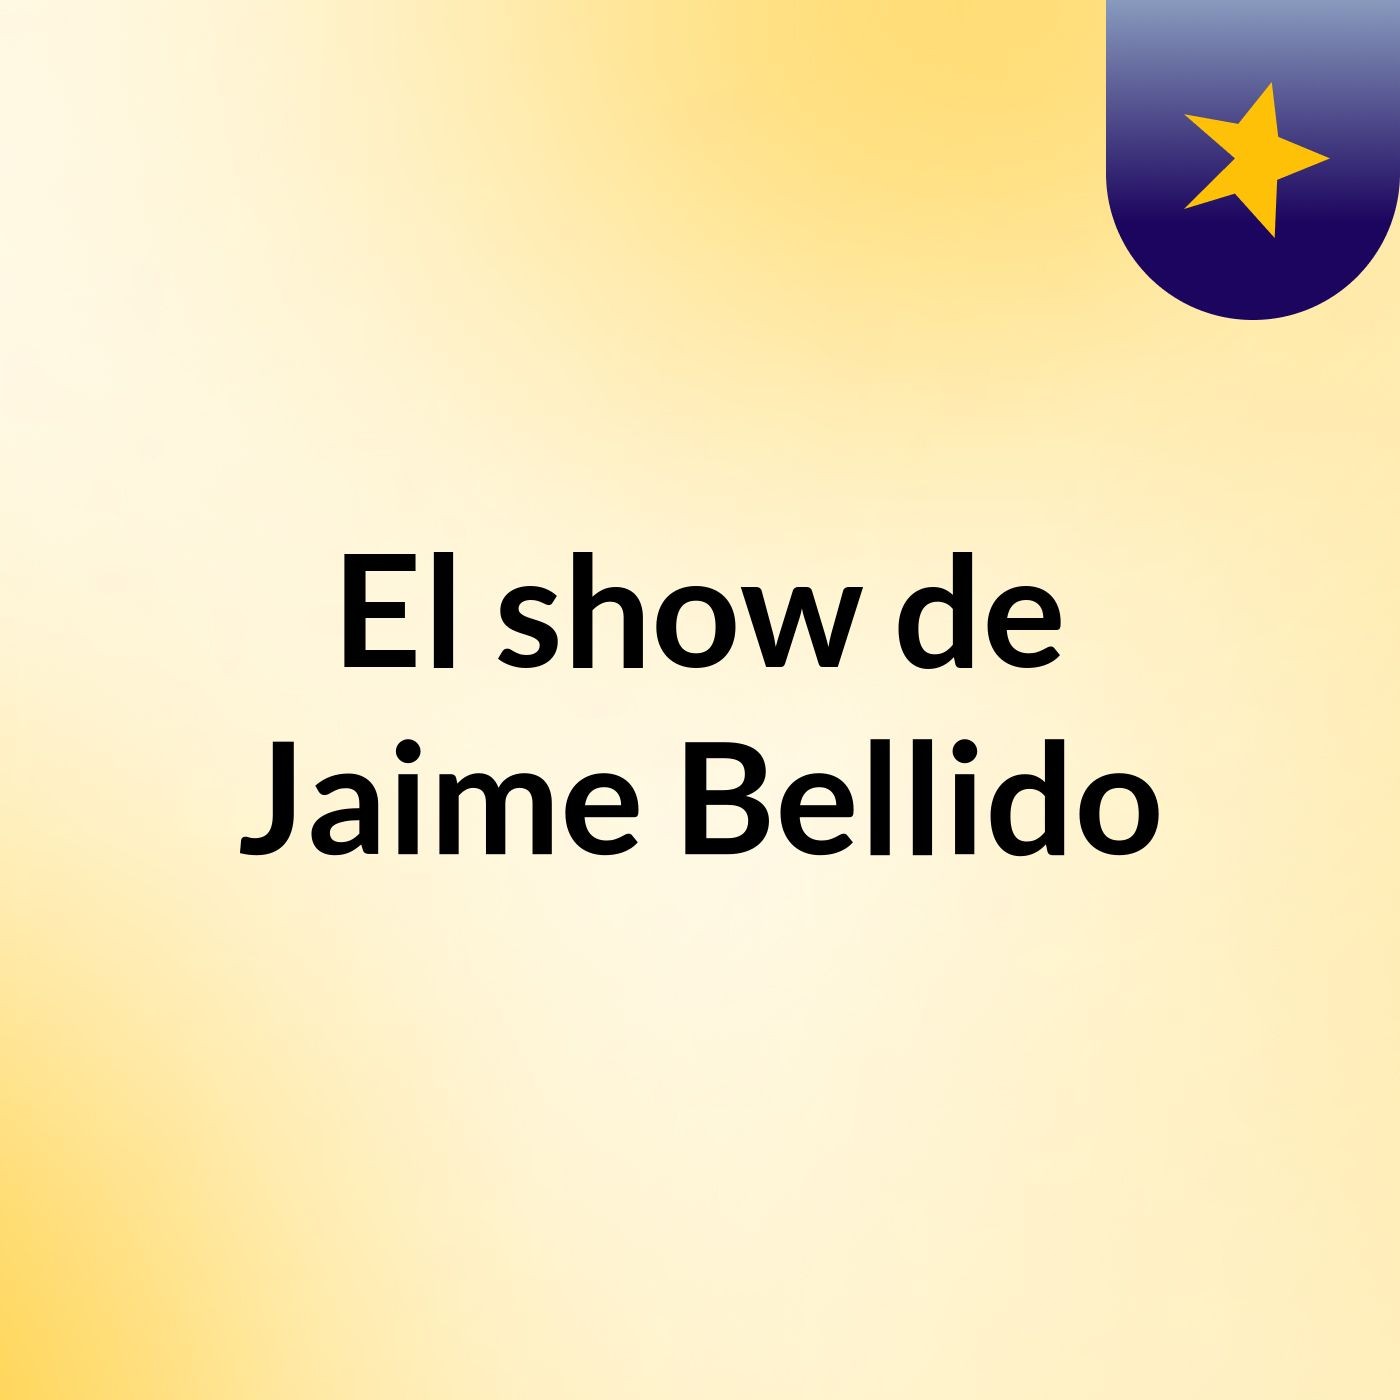 El show de Jaime Bellido